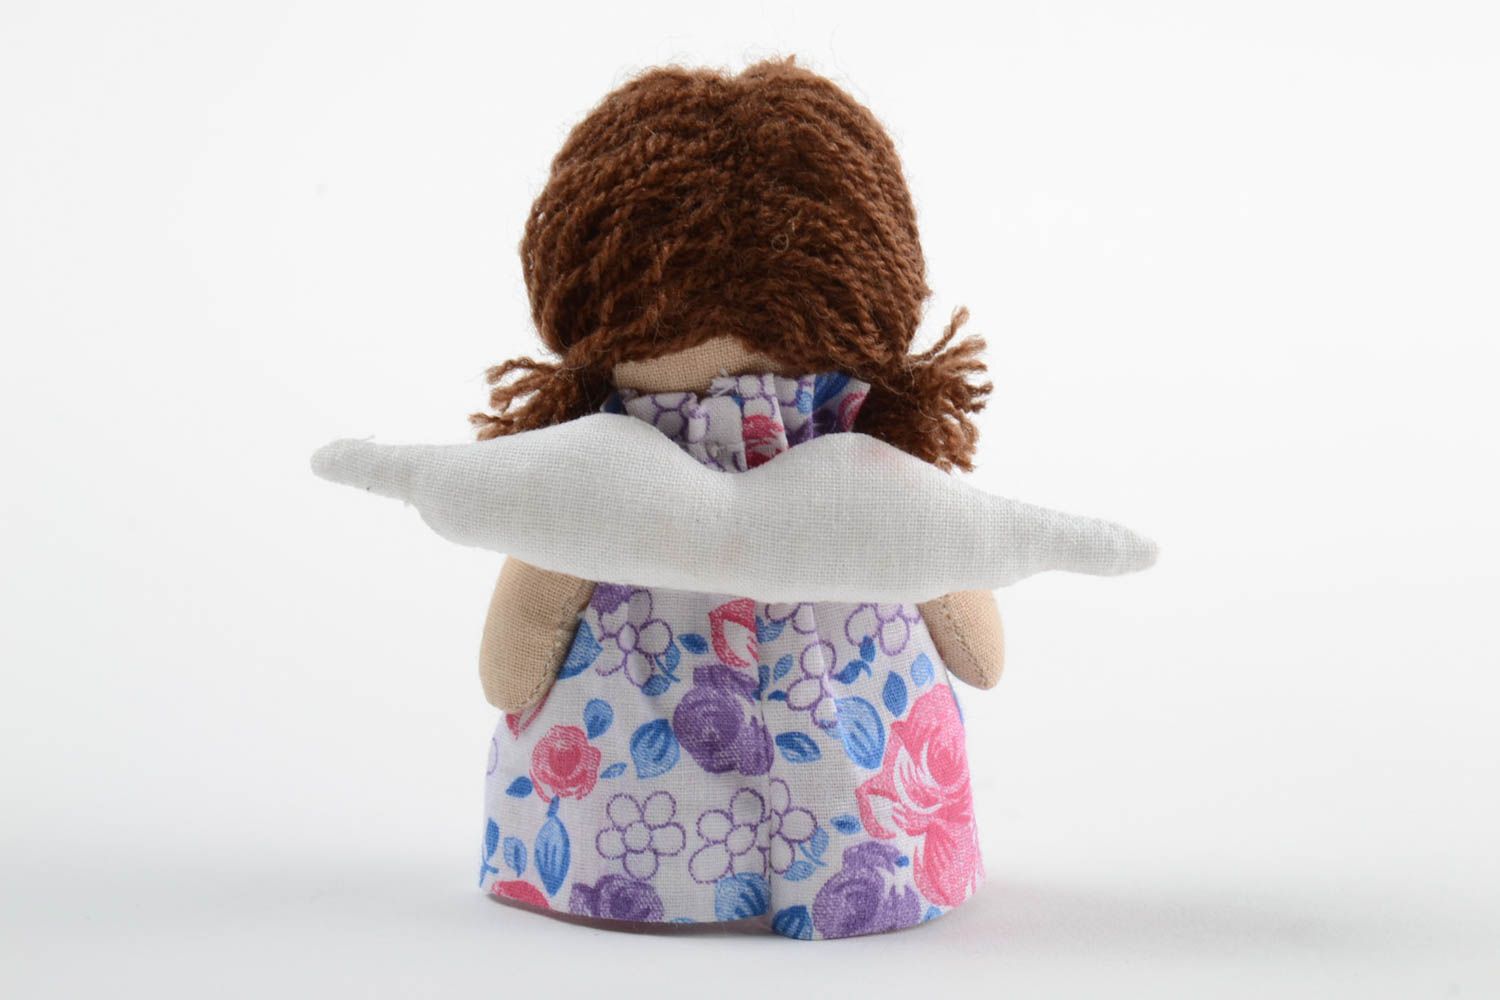 Small homemade fabric interior doll soft rag doll decorative toys gift ideas photo 4